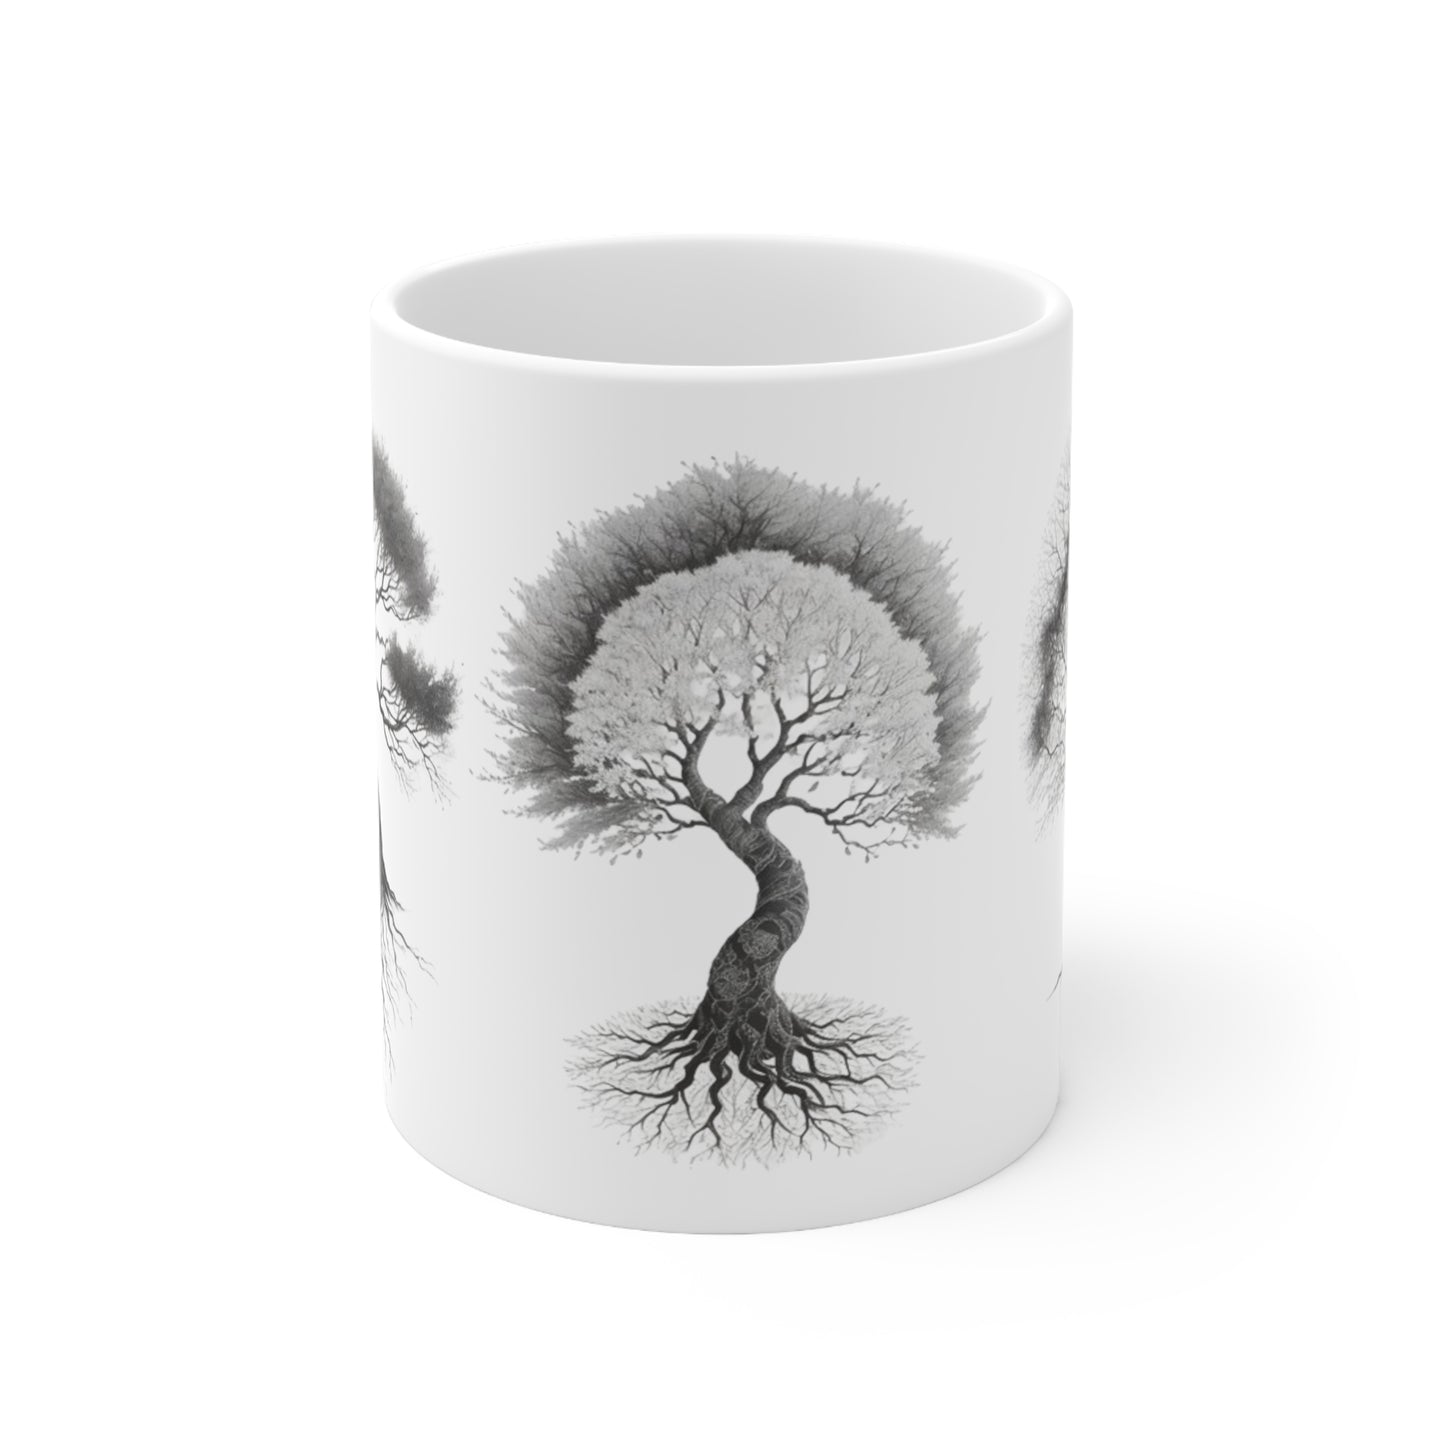 Black and White Crooked Trees Mug - Ceramic Coffee Mug 11oz